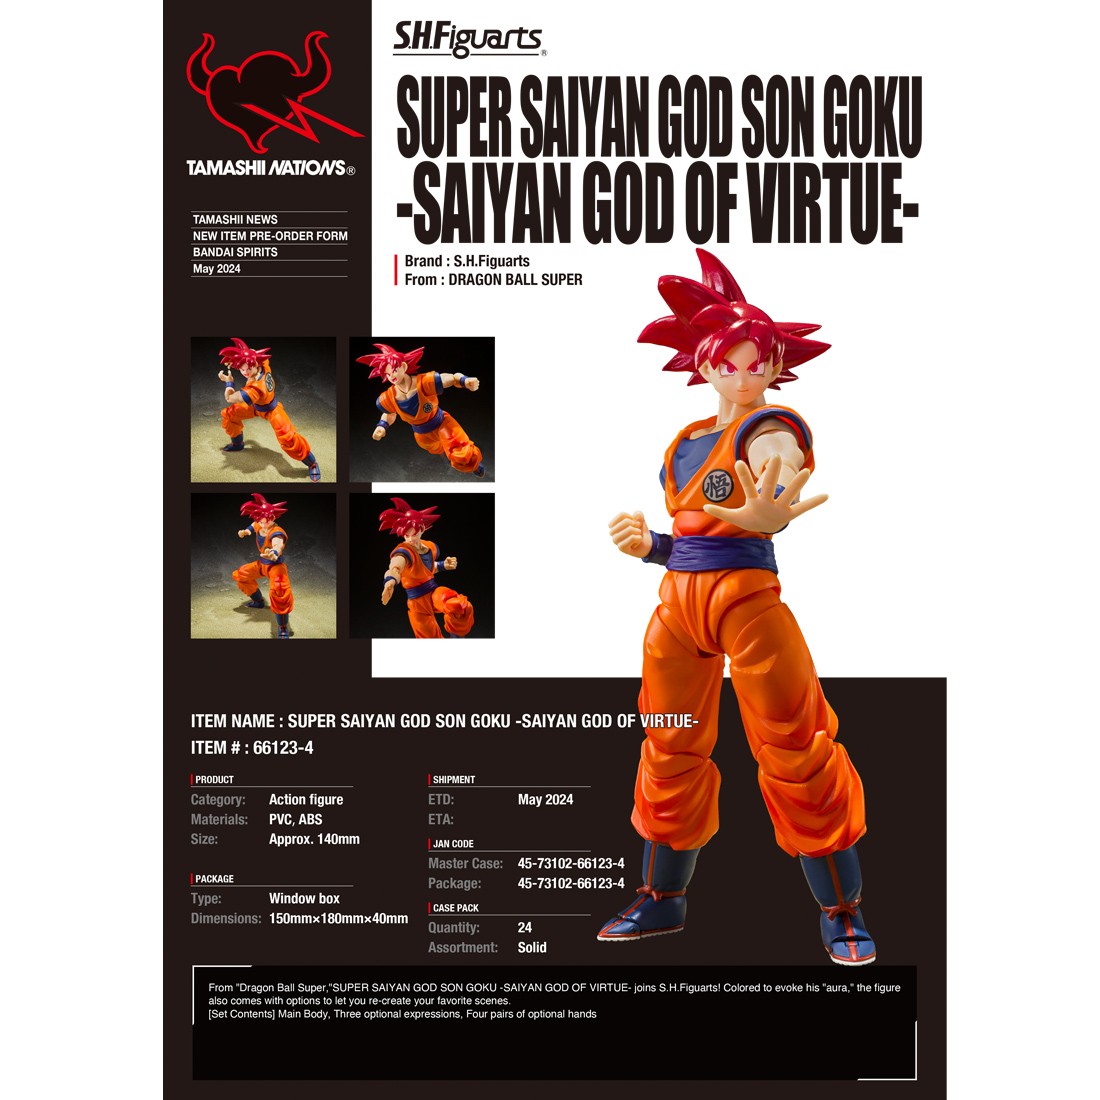 Super Saiyan God Goku - Saiyan God of Virtue - Joins the S.H.